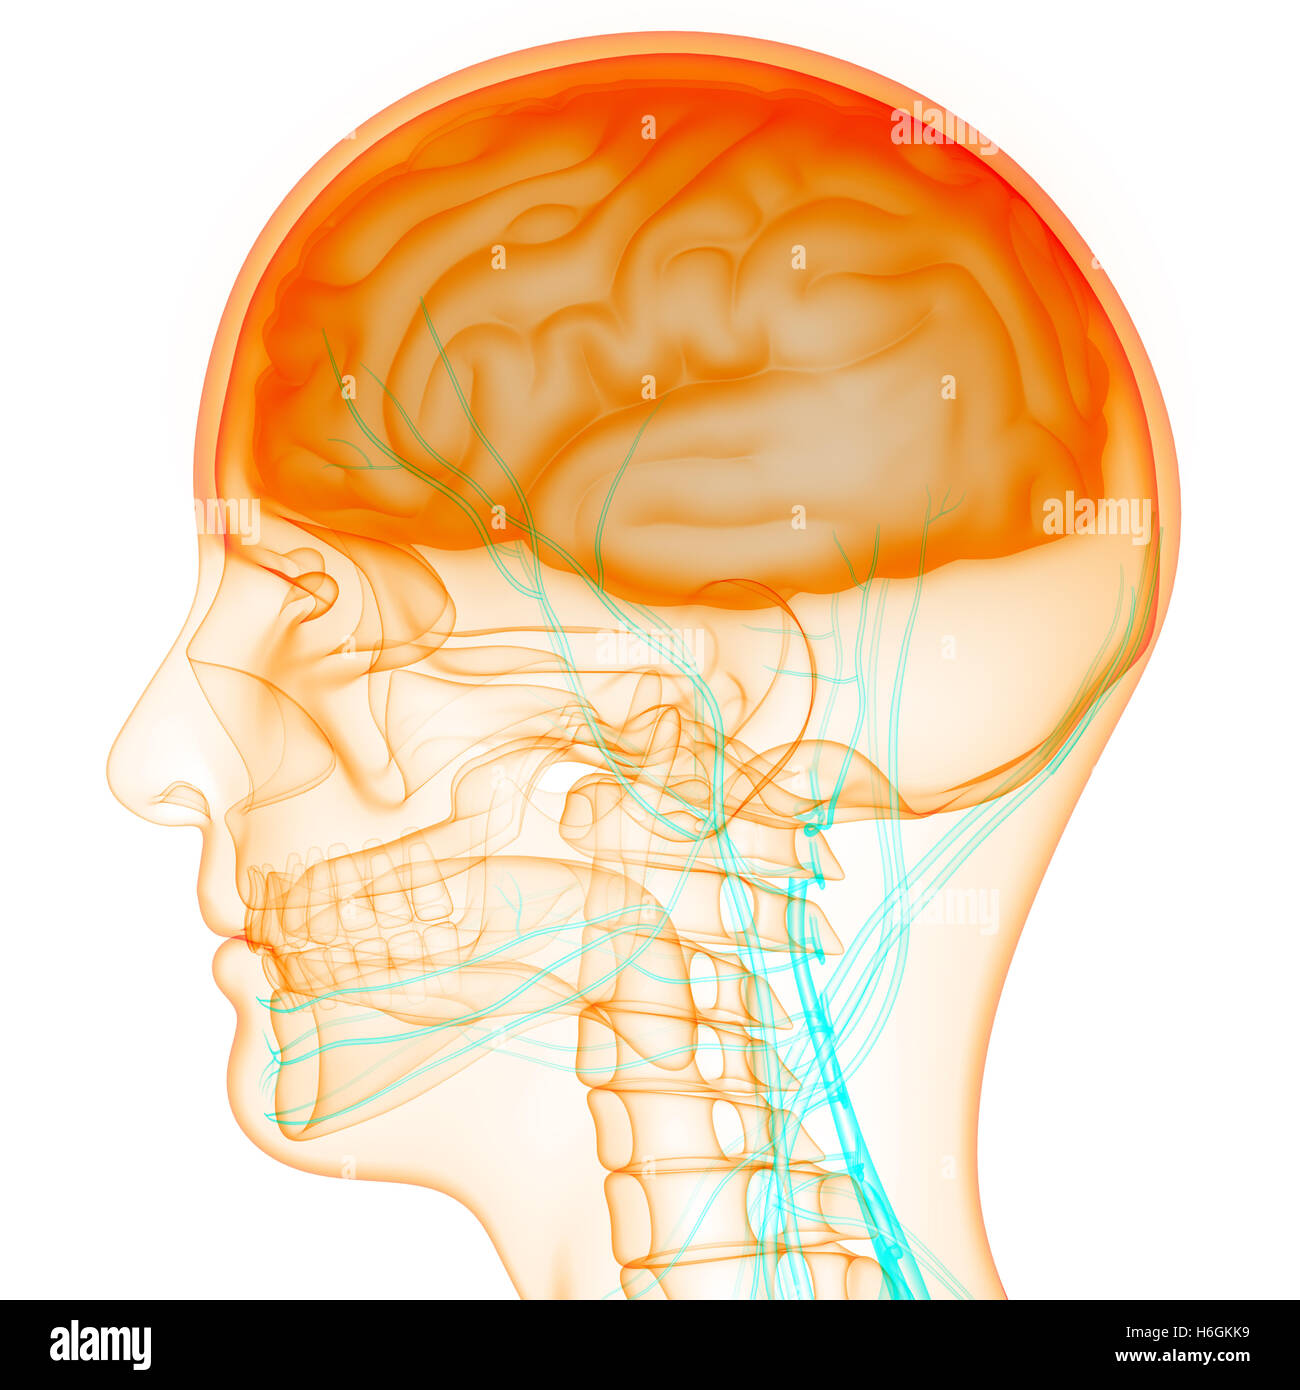 Human Brain with Circulatory System Anatomy Stock Photo